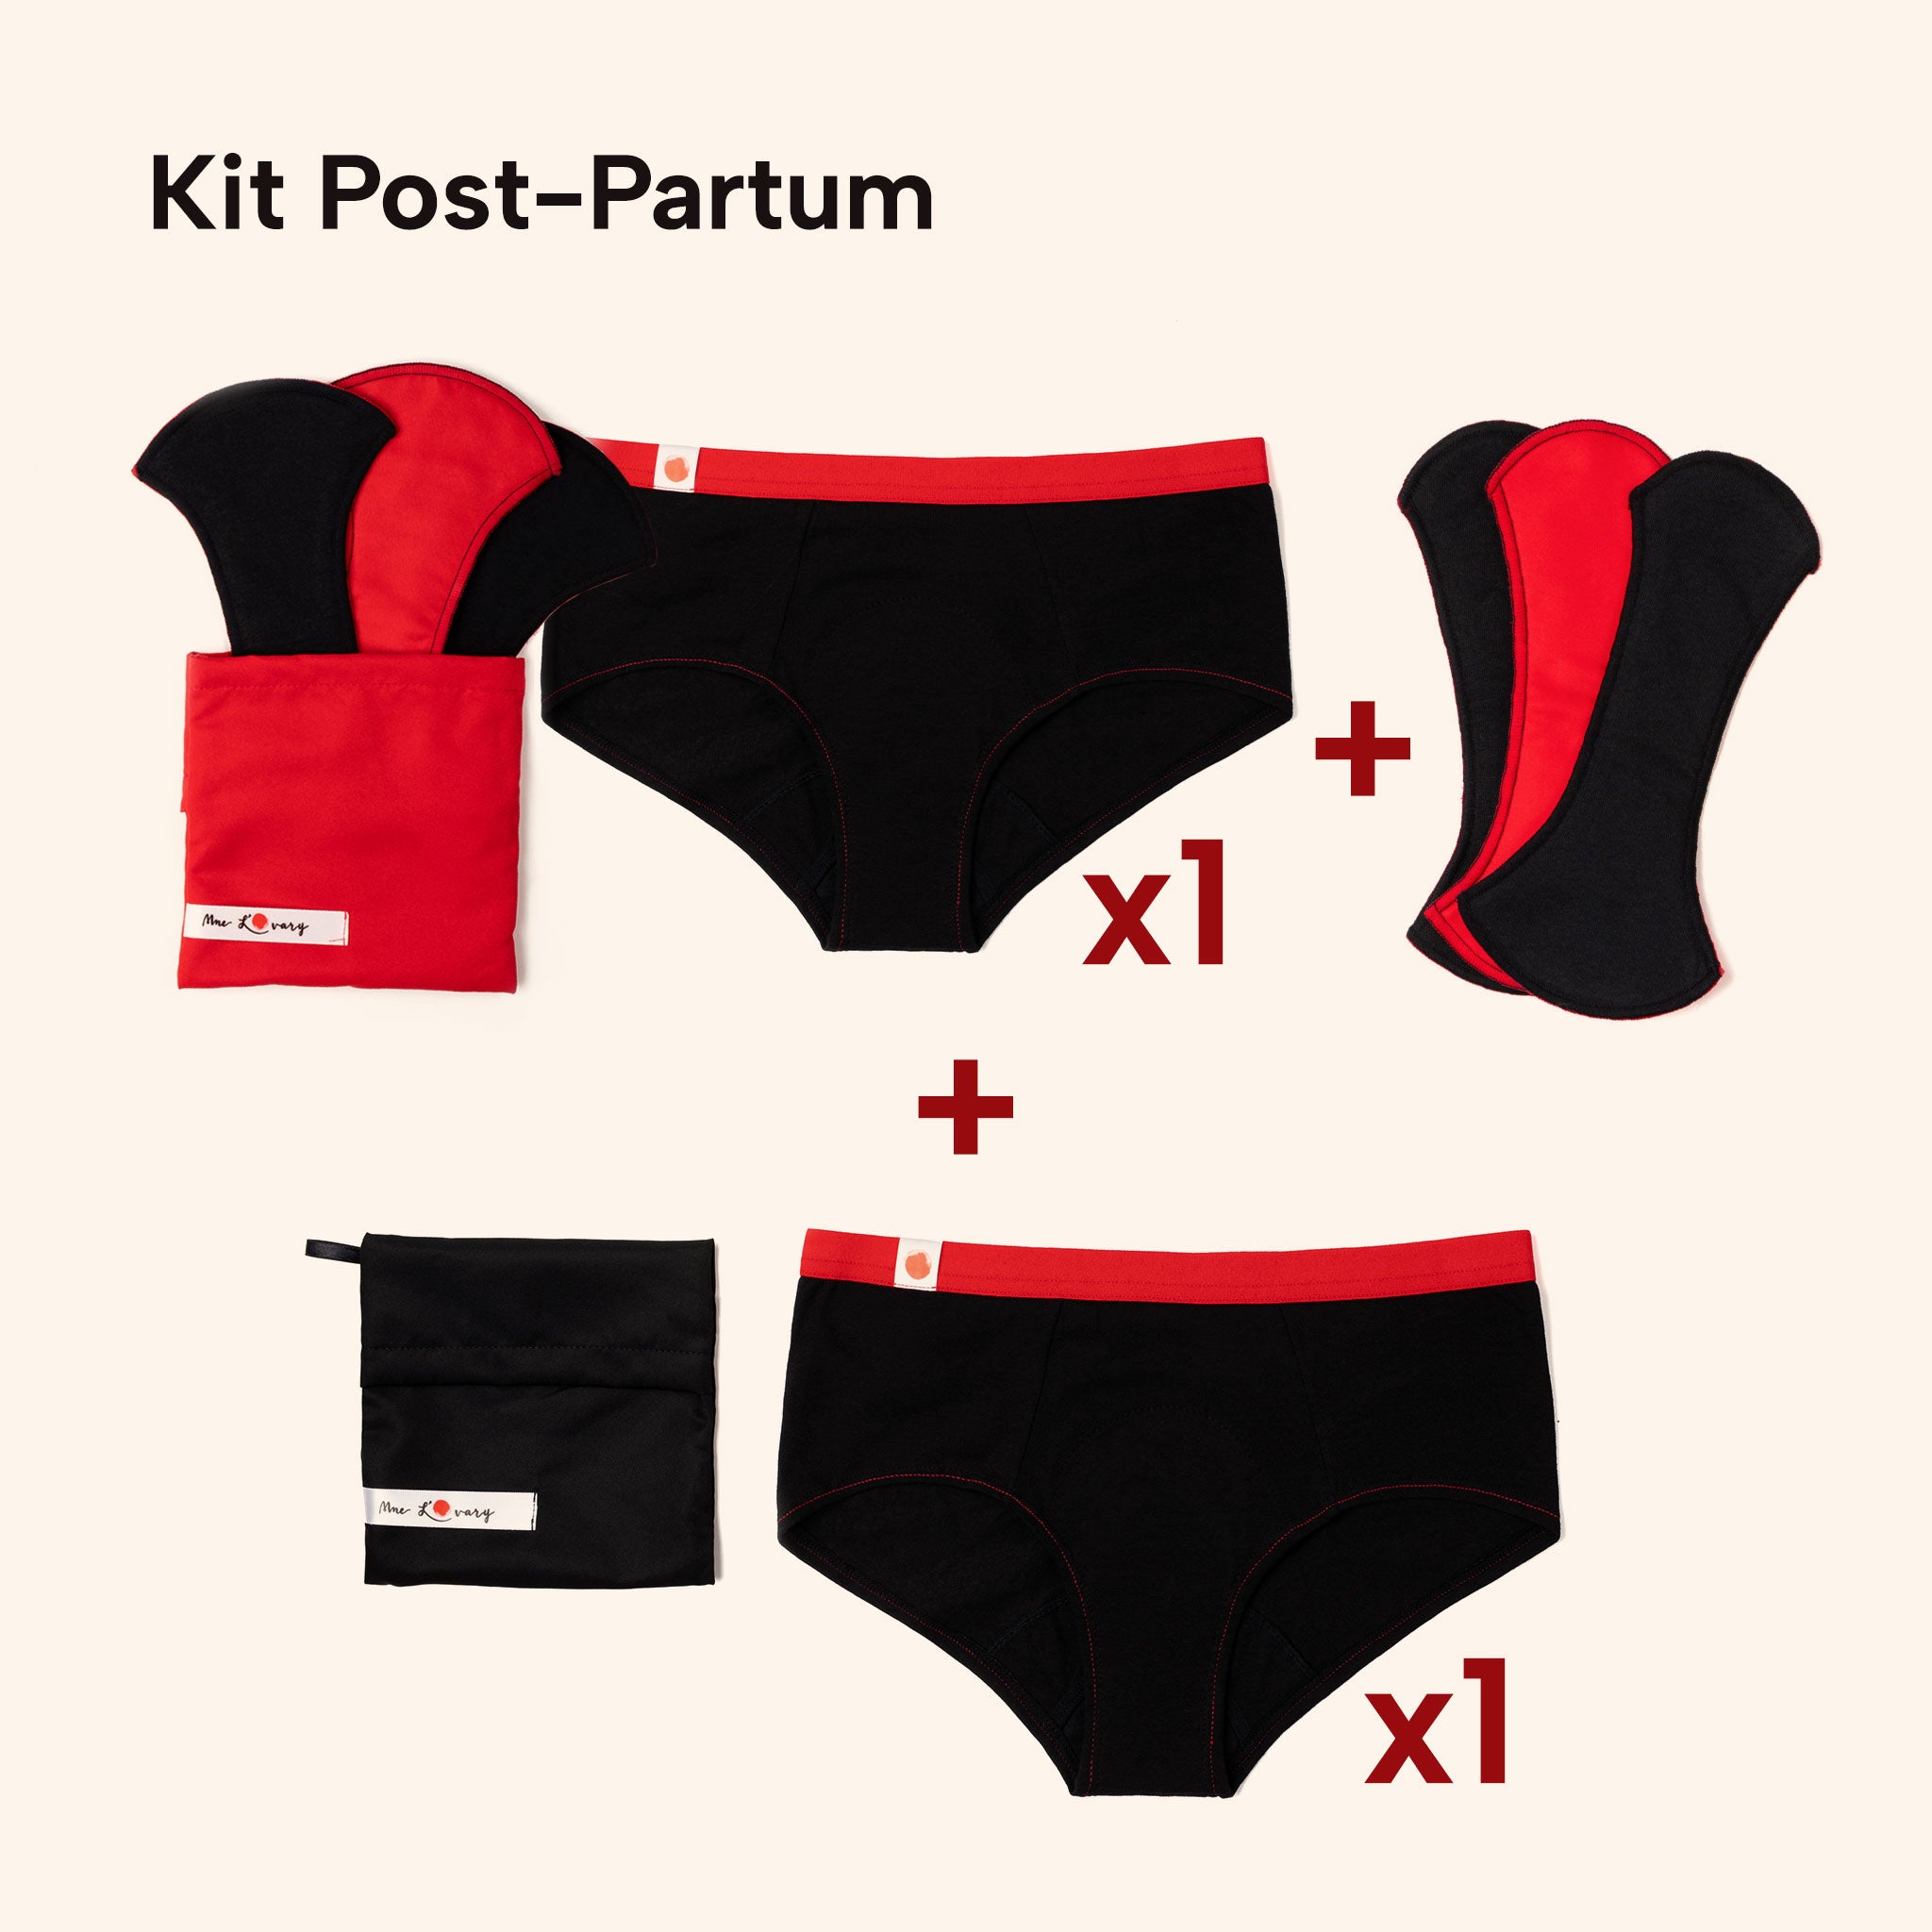 Postpartum Kit